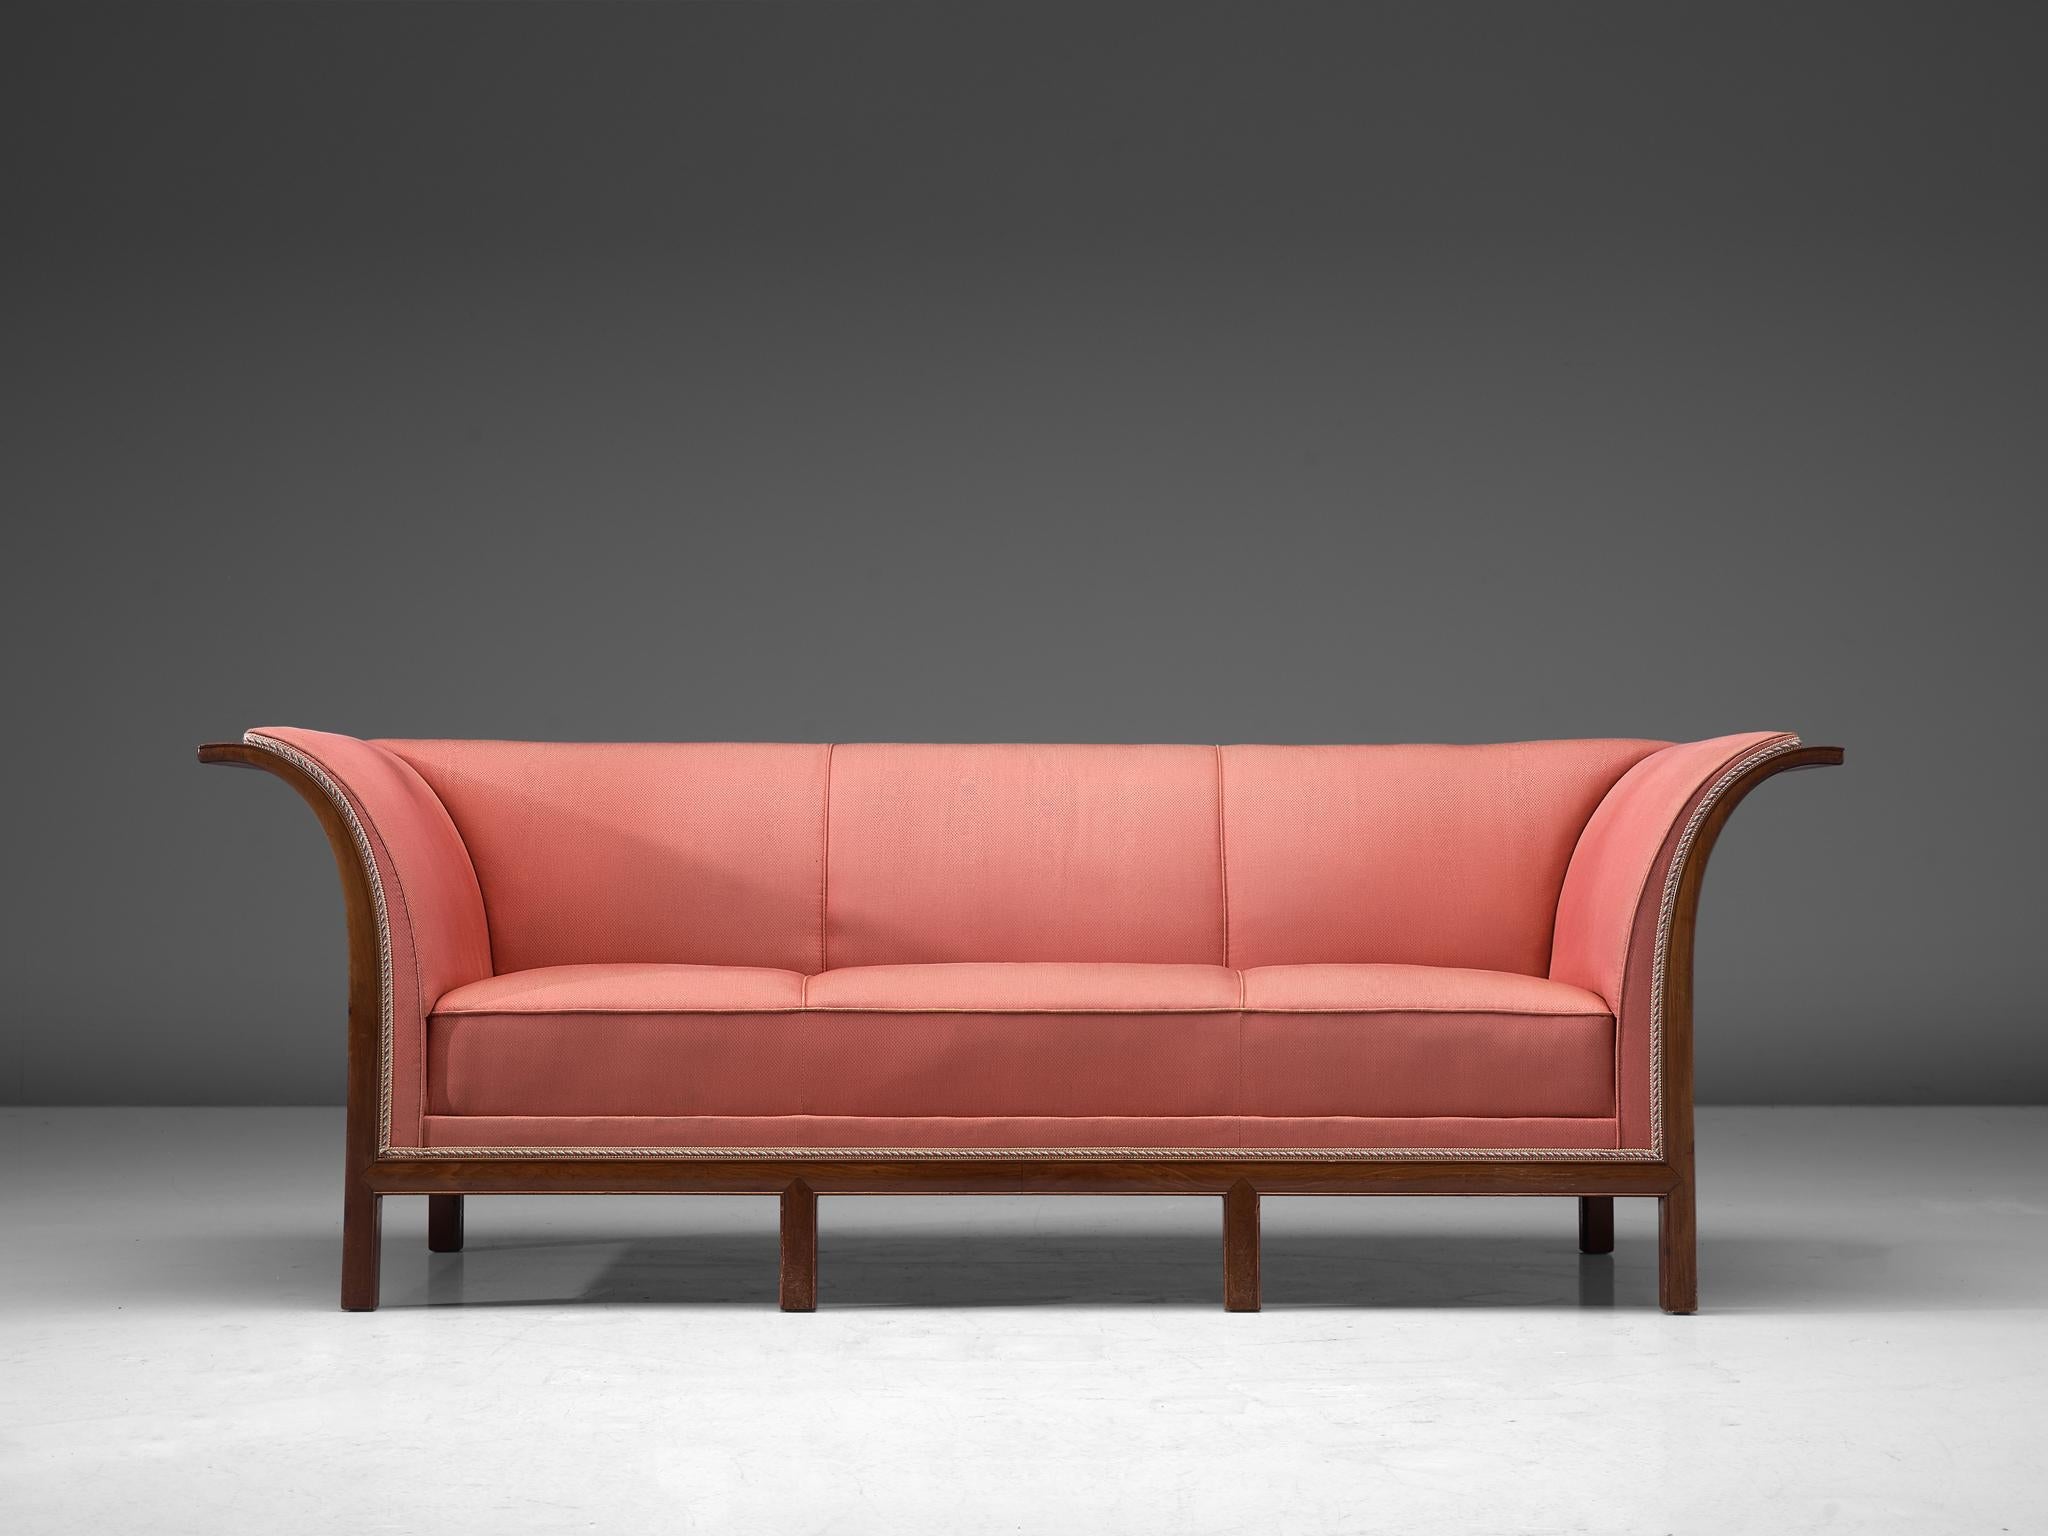 Frits Henningsen Sofa in Mahogany and Pink Upholstery